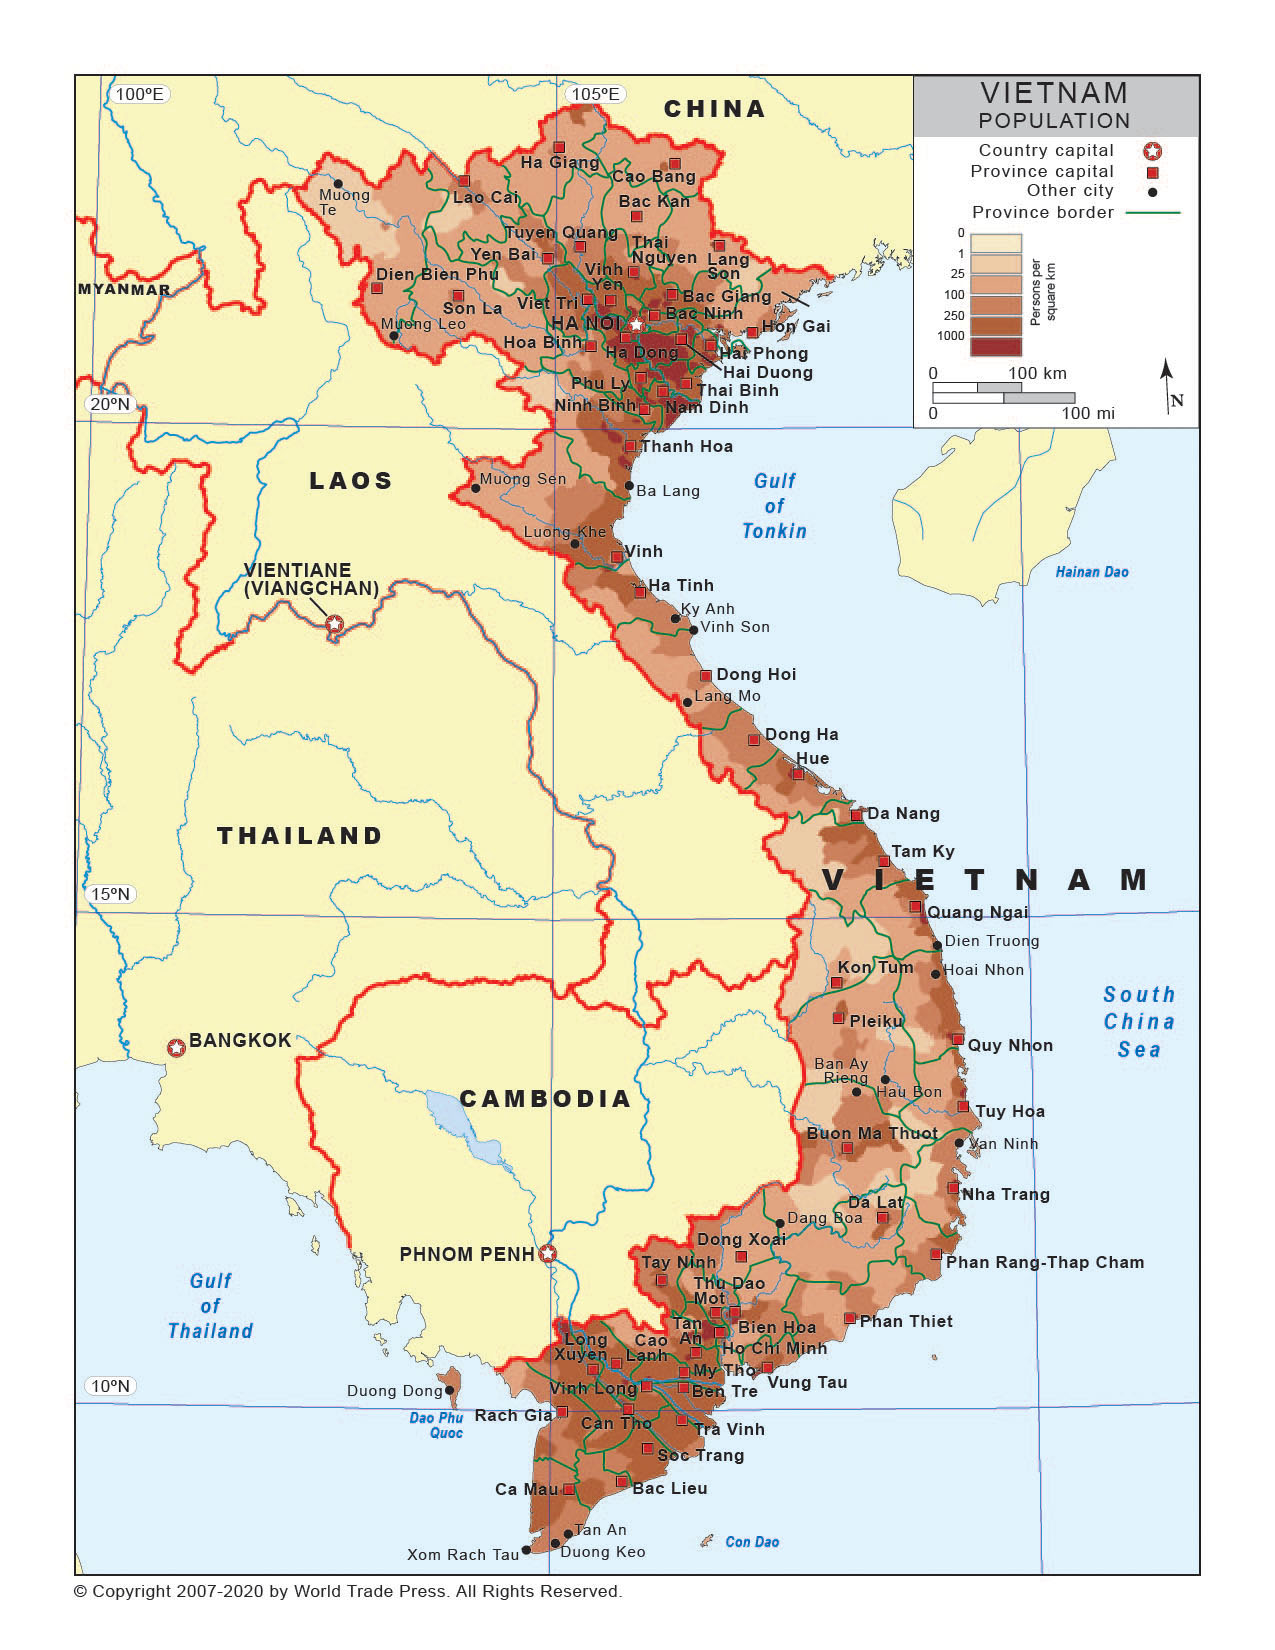 Population Density Map of Vietnam